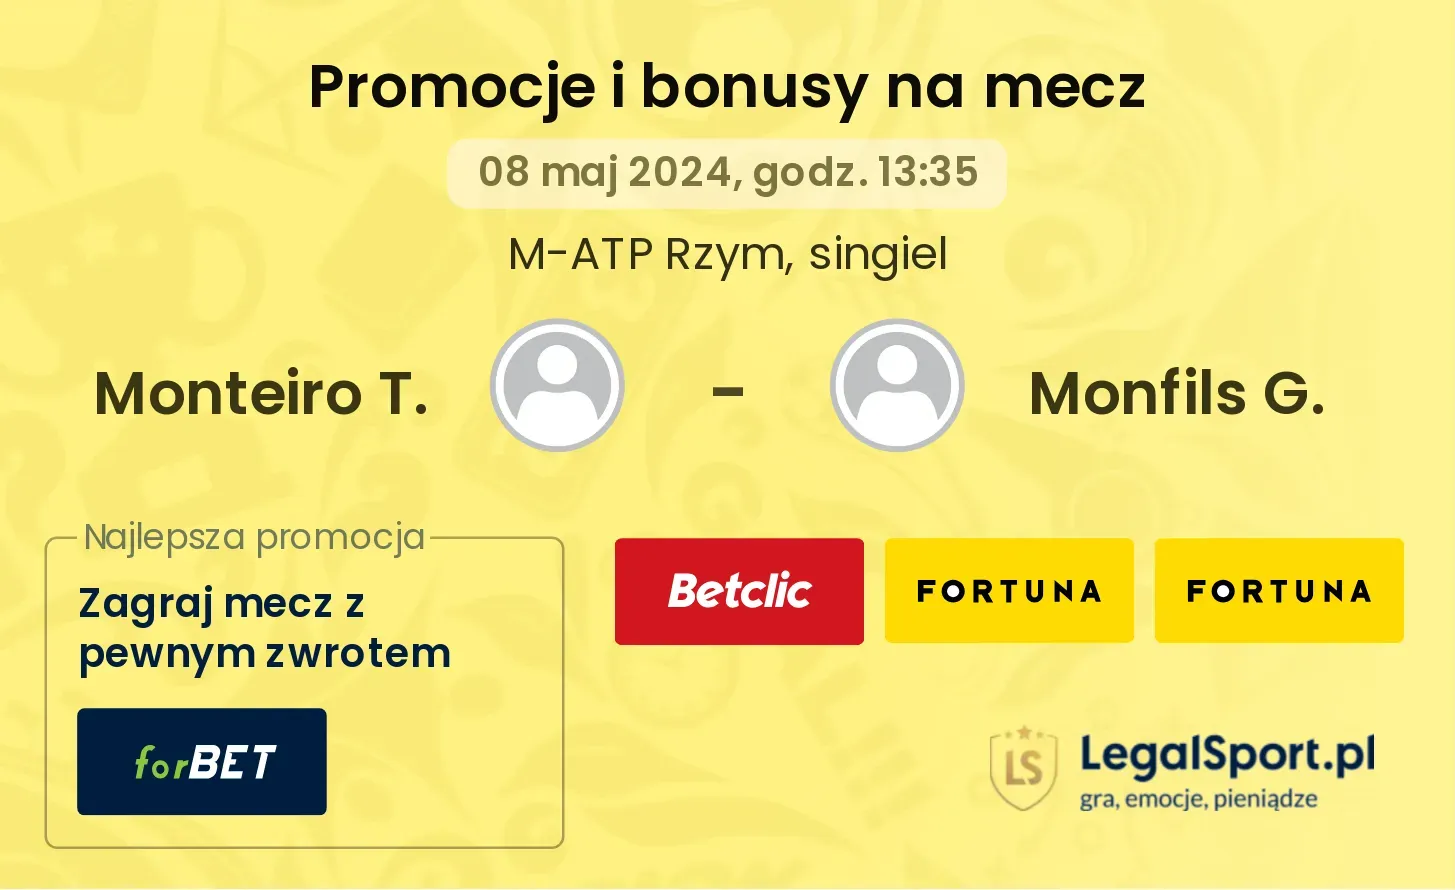 Monteiro T. - Monfils G. promocje bonusy na mecz